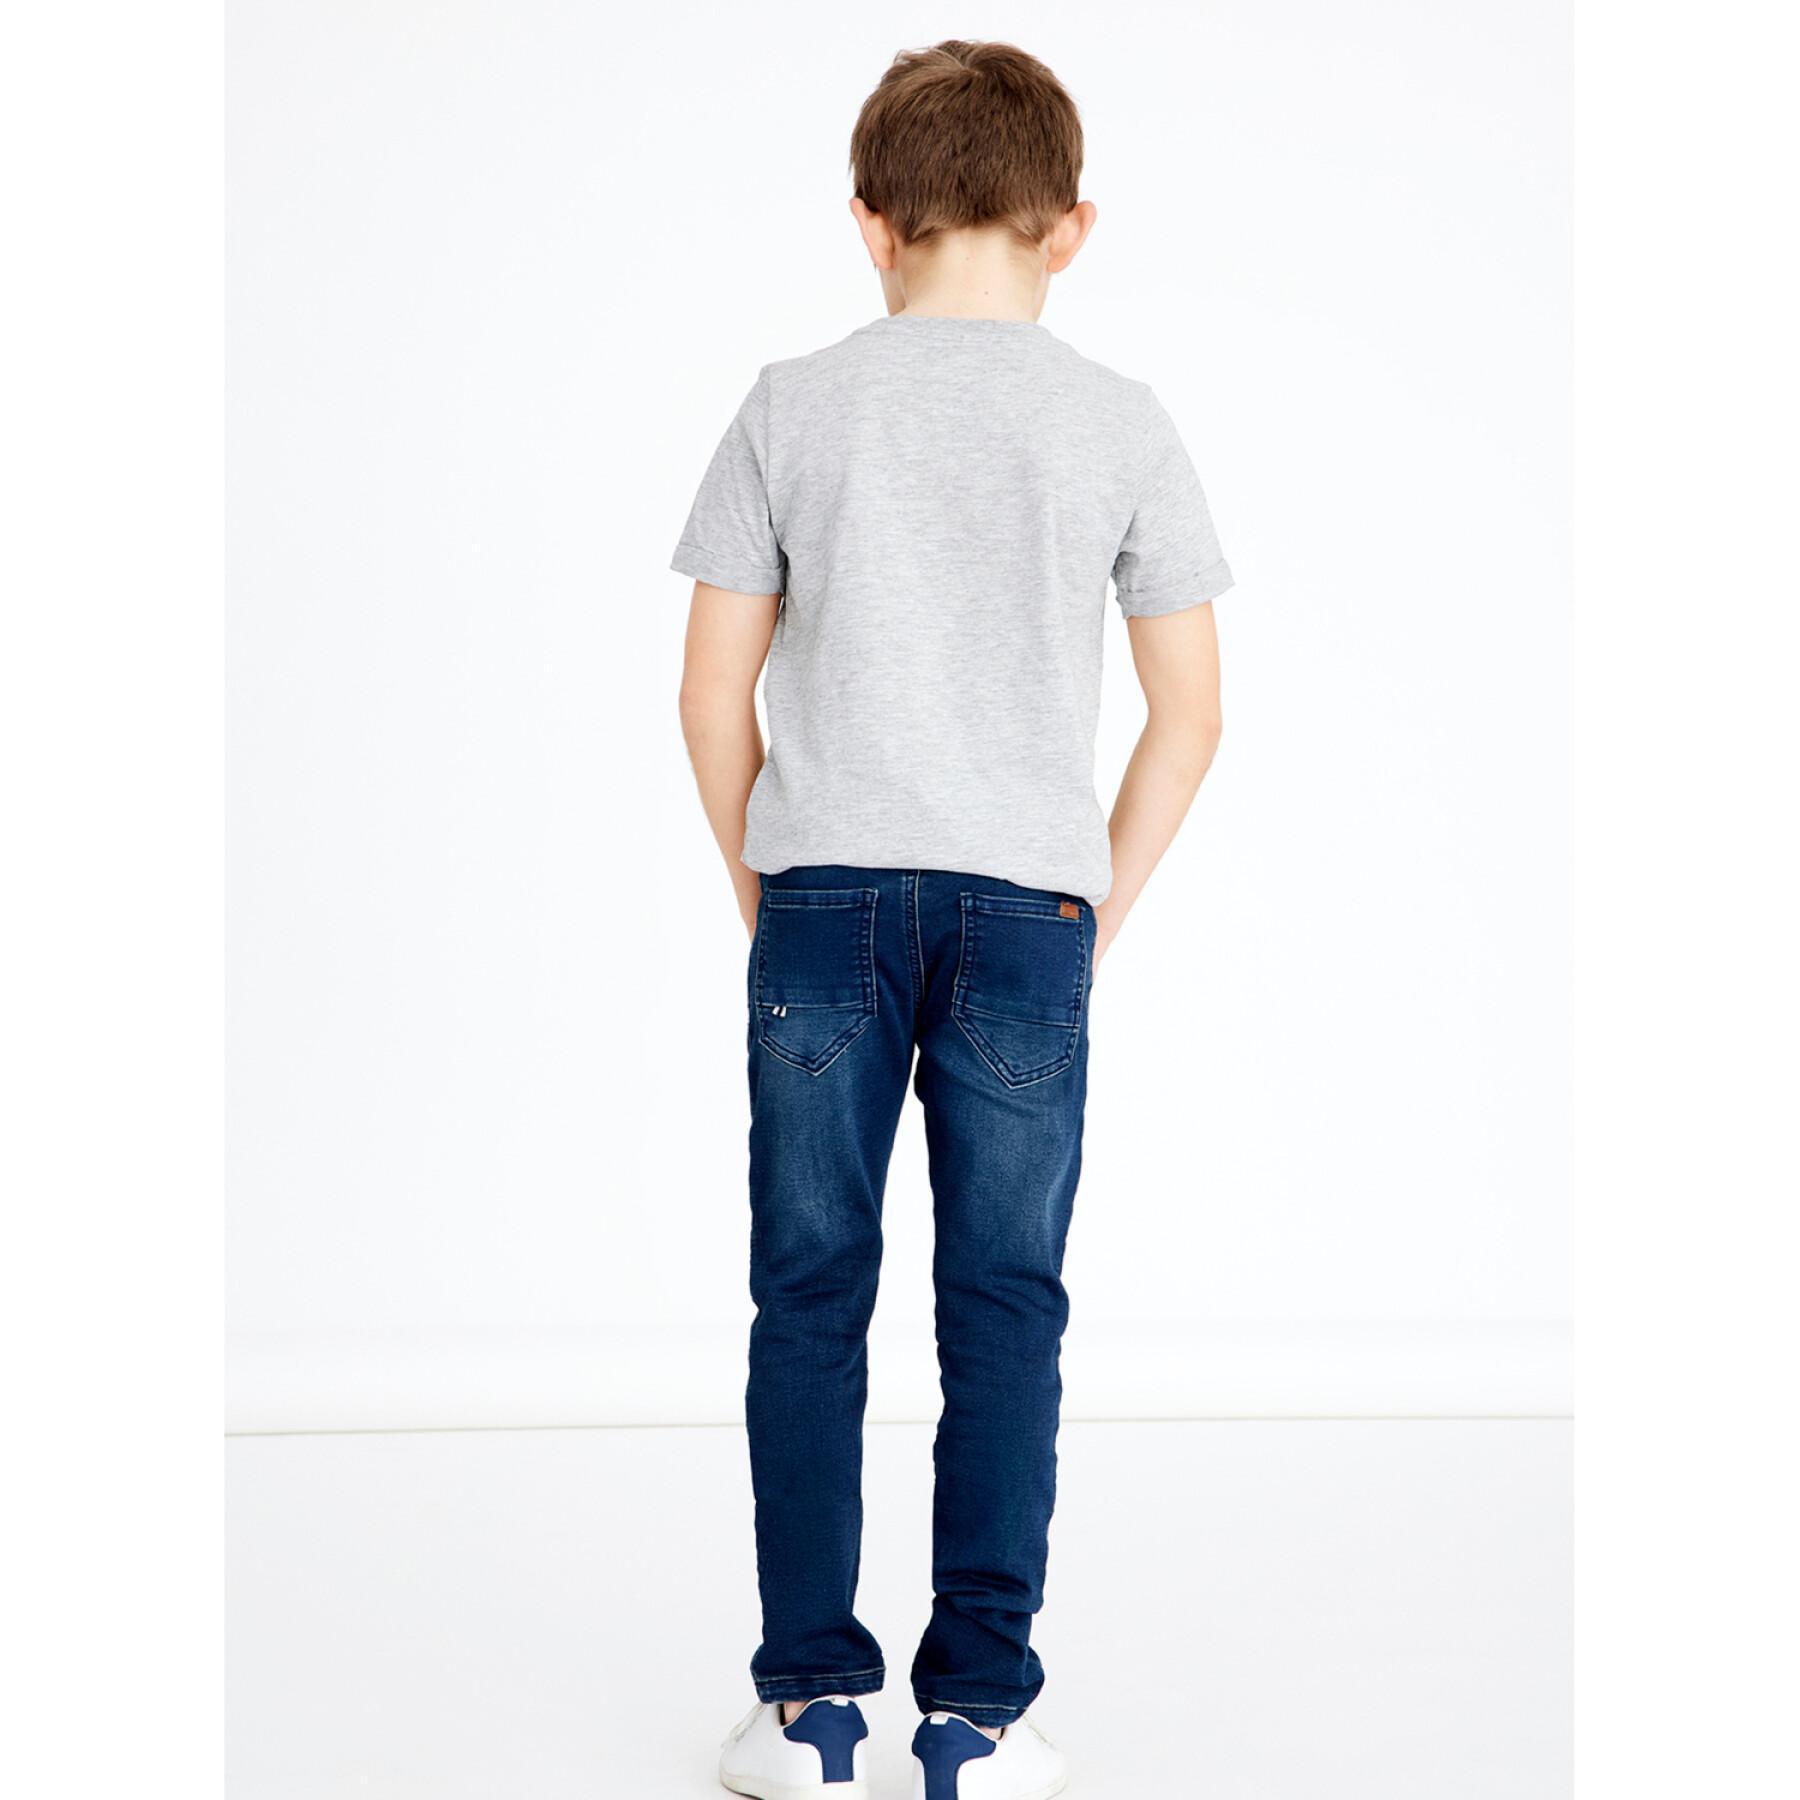 Children's jeans Name it Robin Tobos